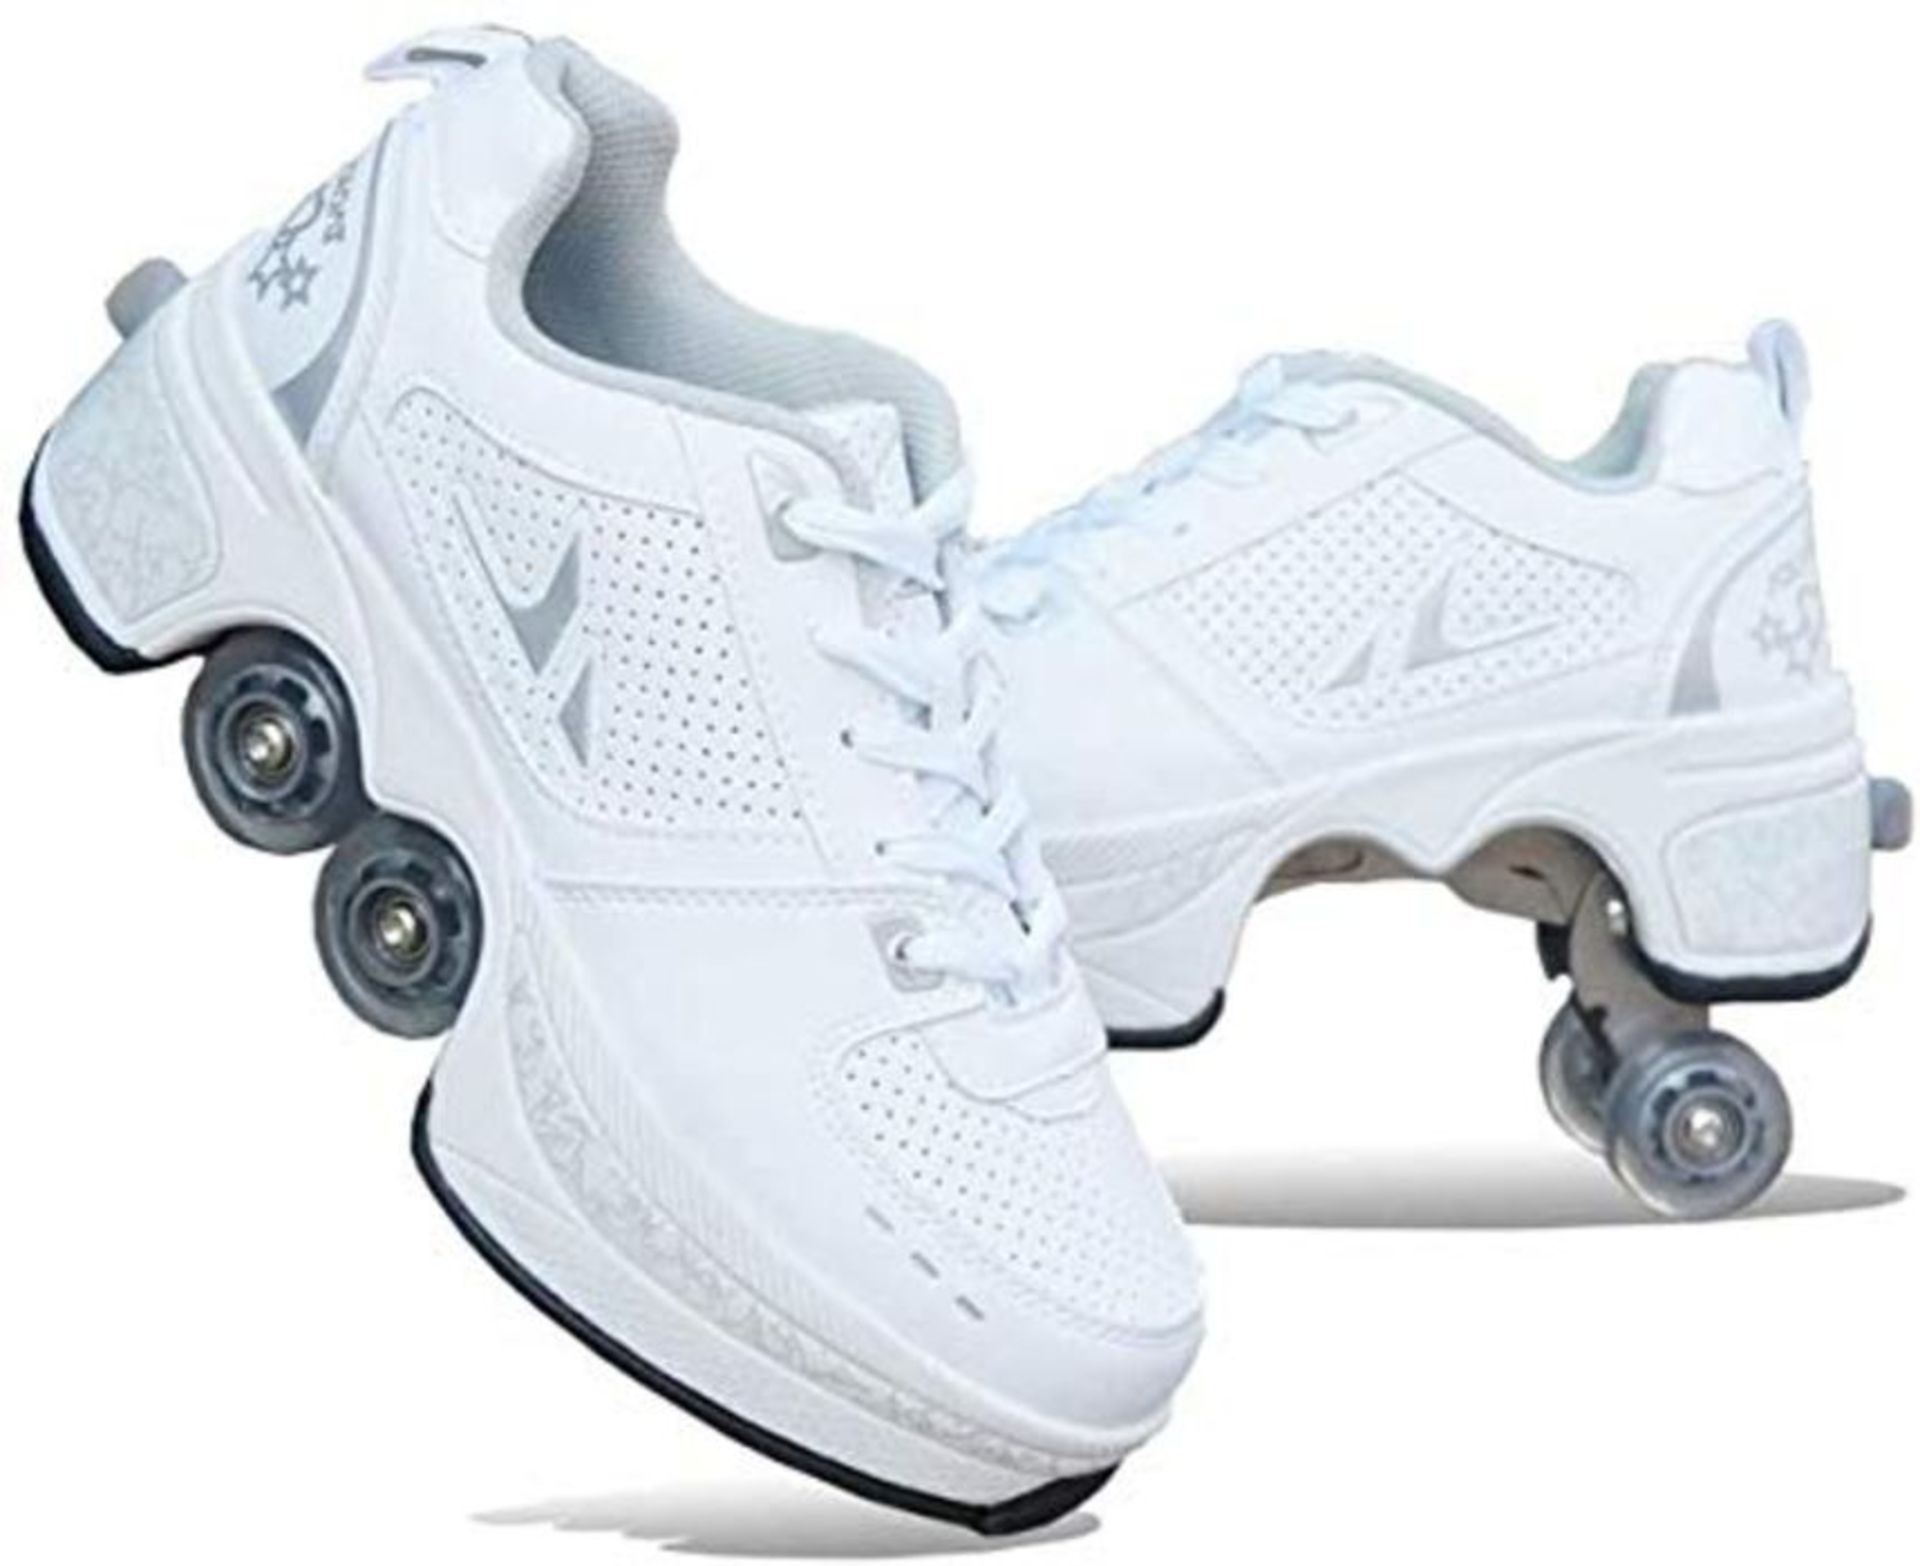 RRP £68.00 Ironhead Multifunctional Deformed Shoes Children Students Adult Roller Skating Roller